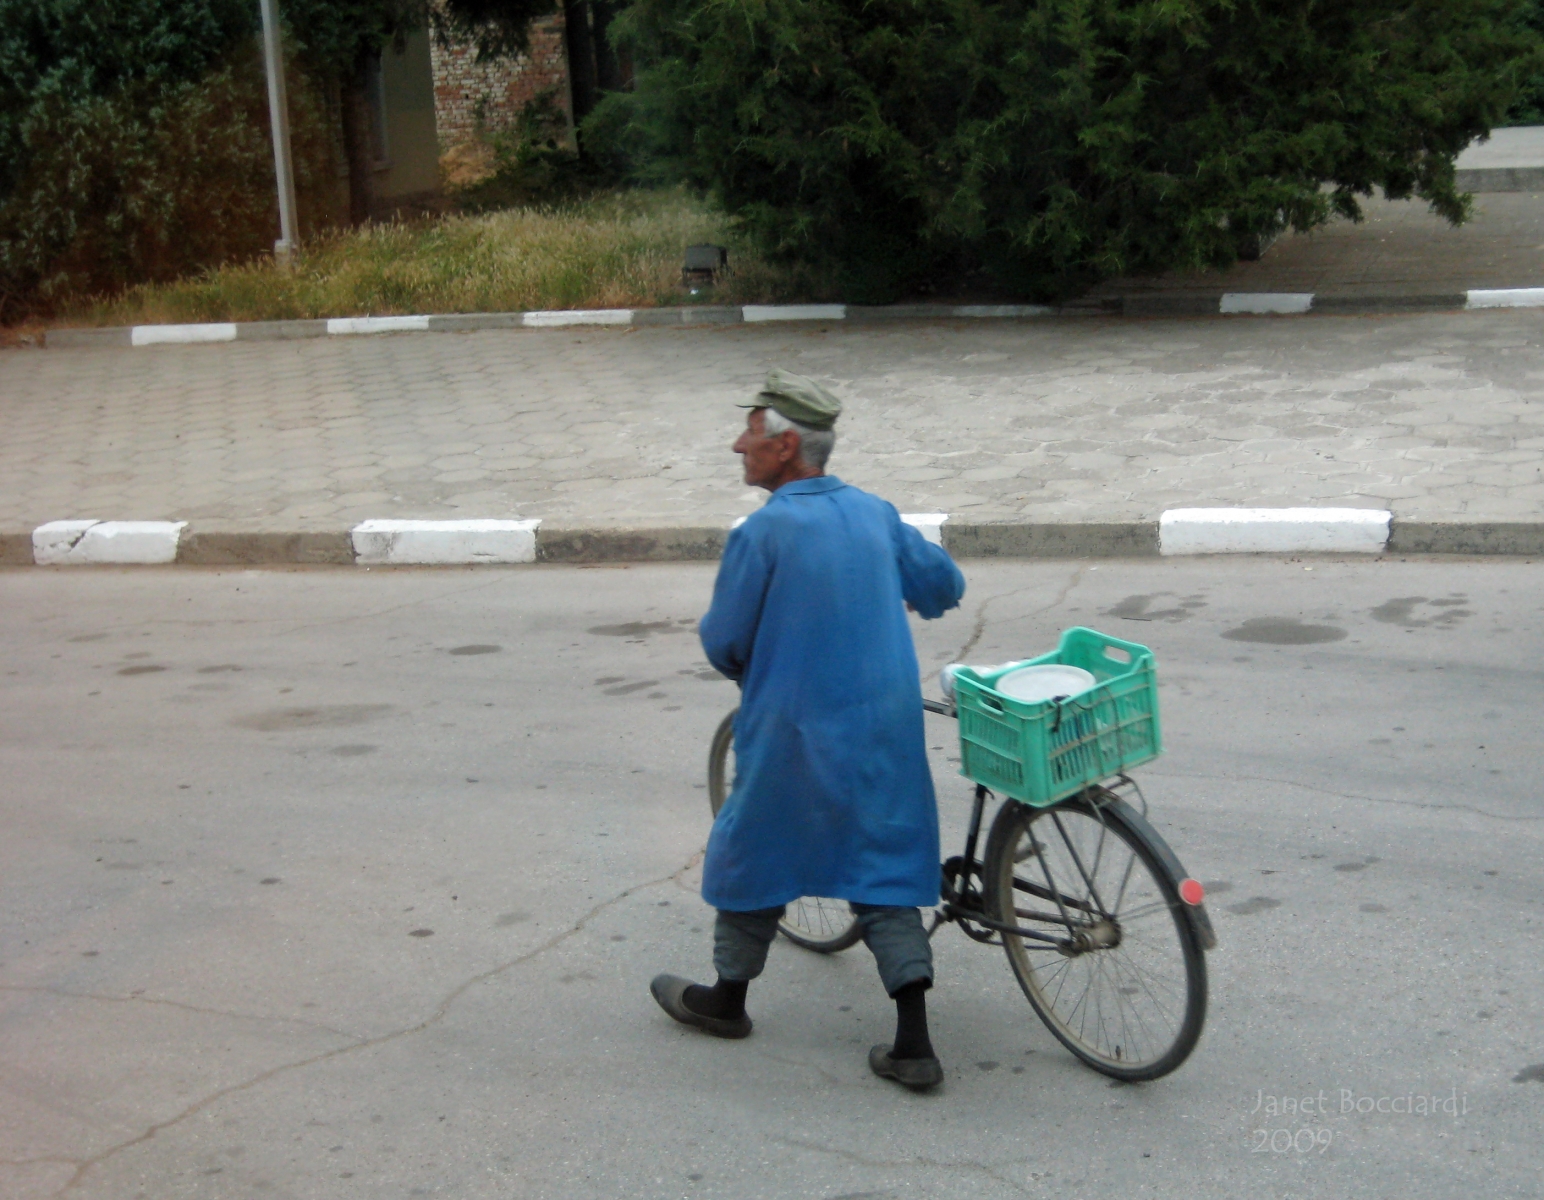 Man in blue coat with bike